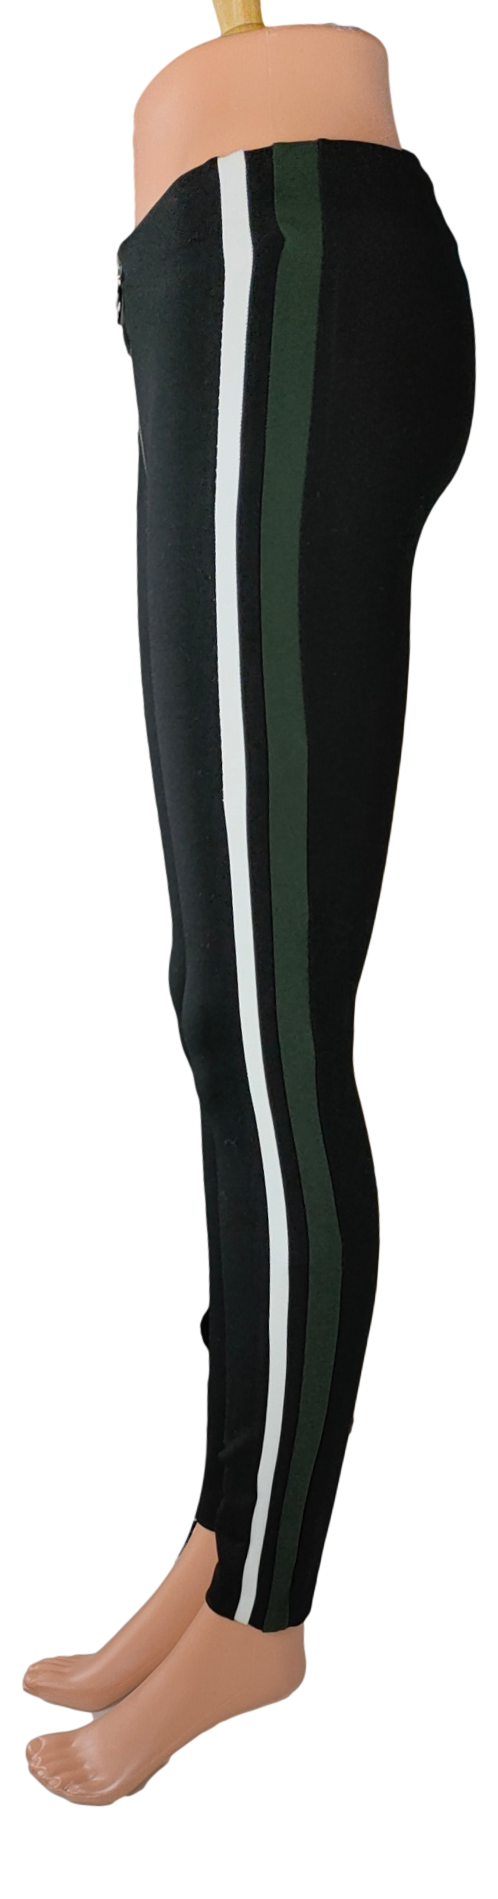 Pantalon Zara -Taille XS